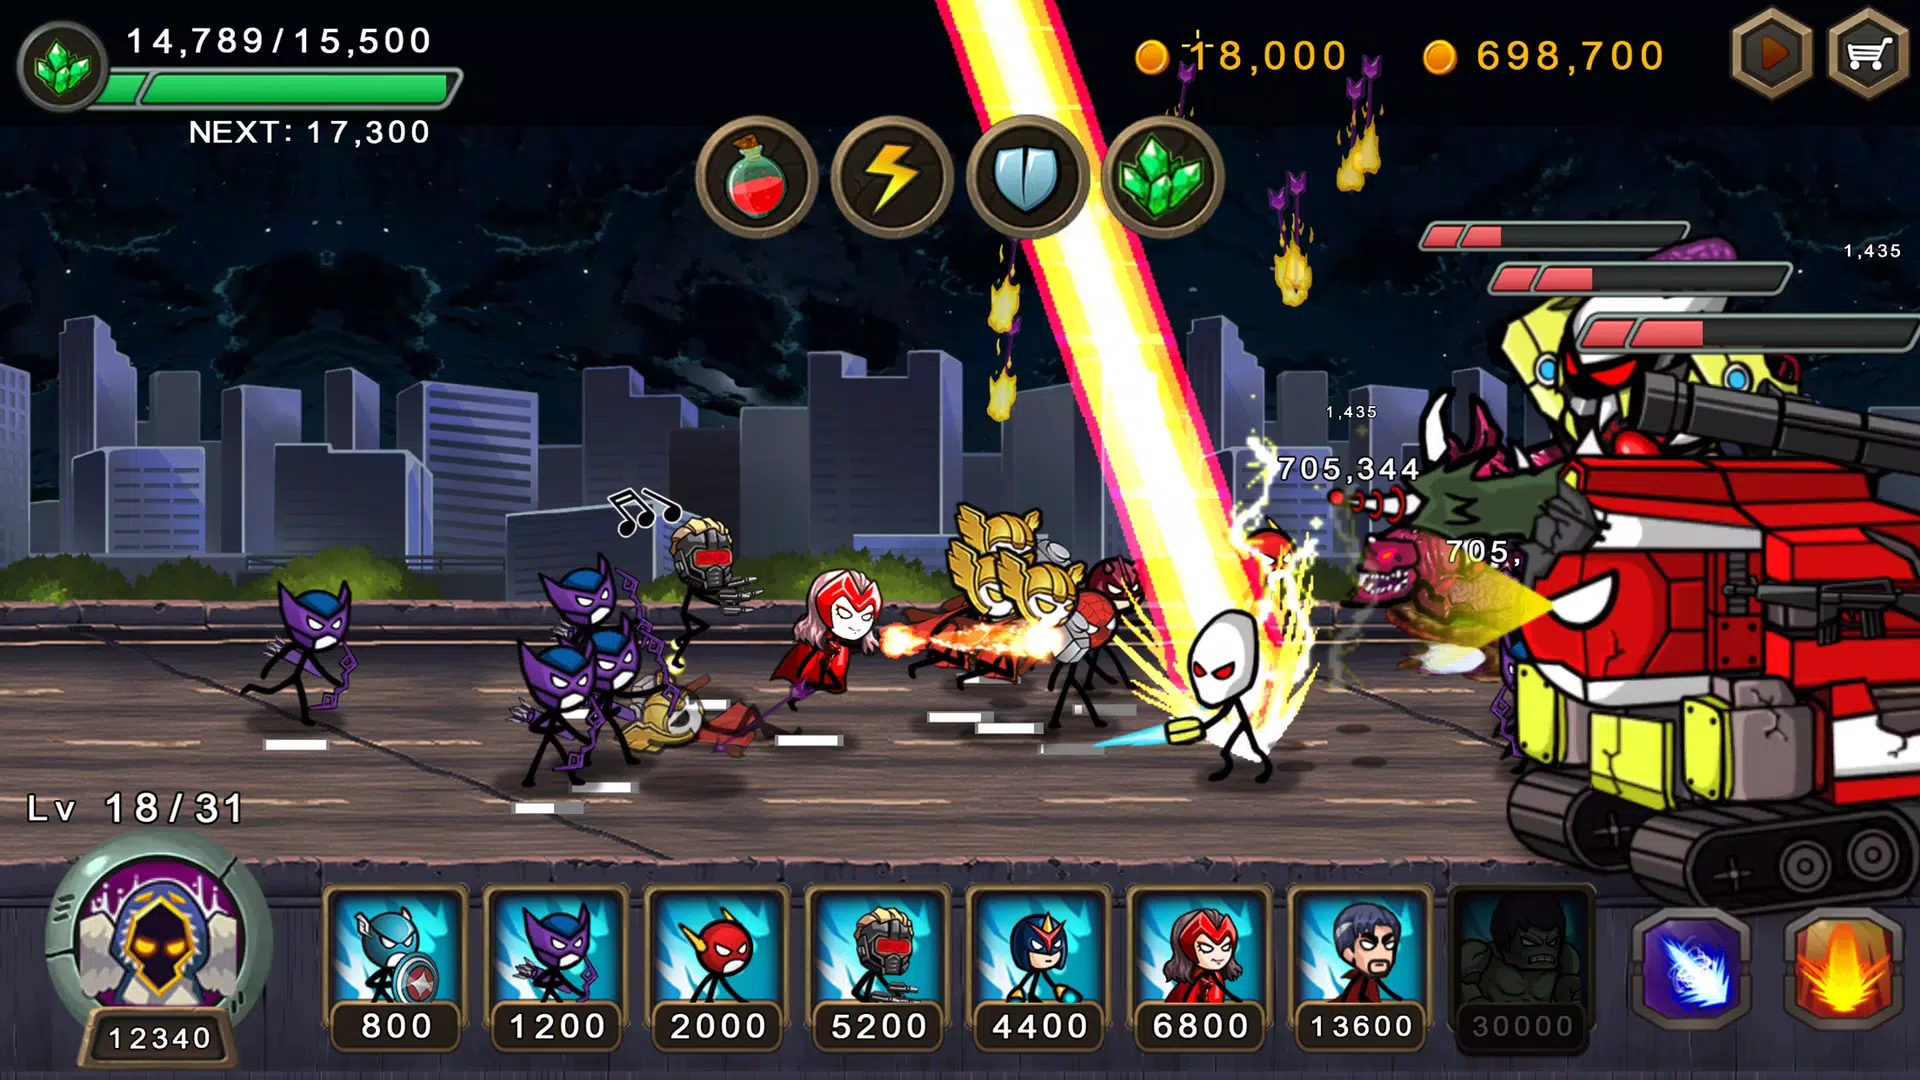 Defense Heroes 360 para Android - Download